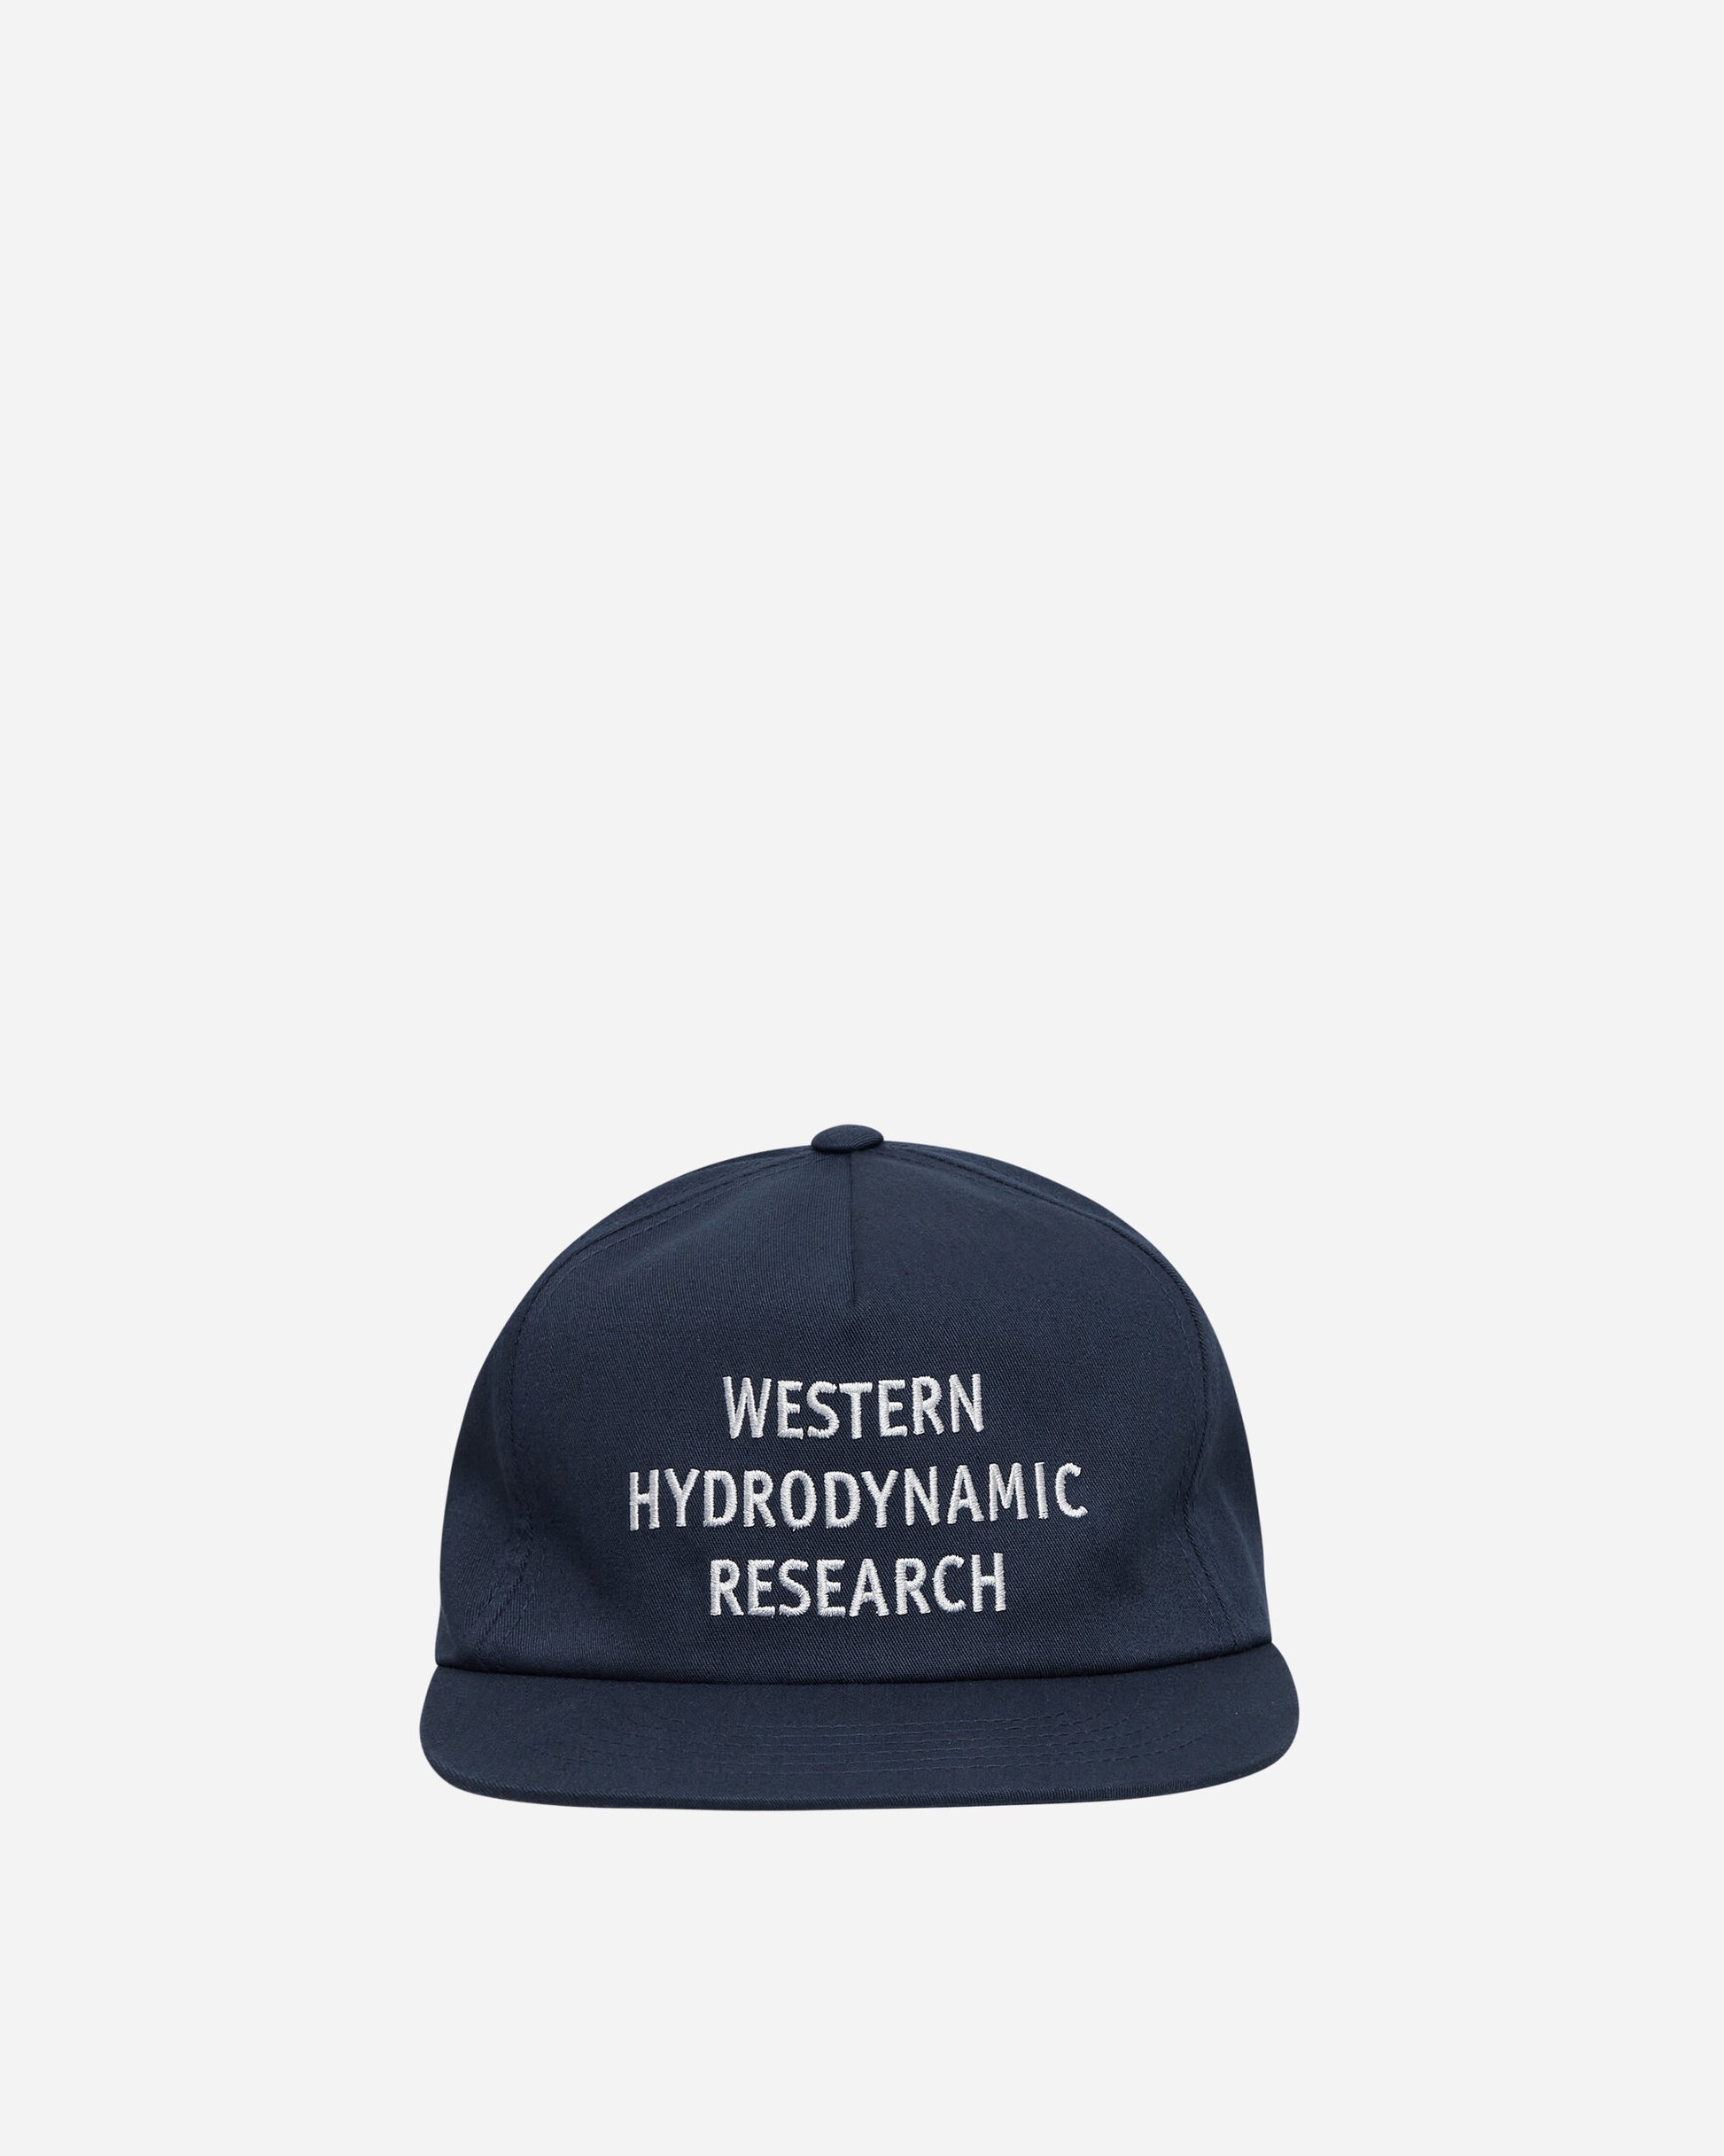 WESTERN HYDRODYNAMIC RESEARCH Promo Hat Navy Hats Caps MWHR24SPSU4001 NAVY